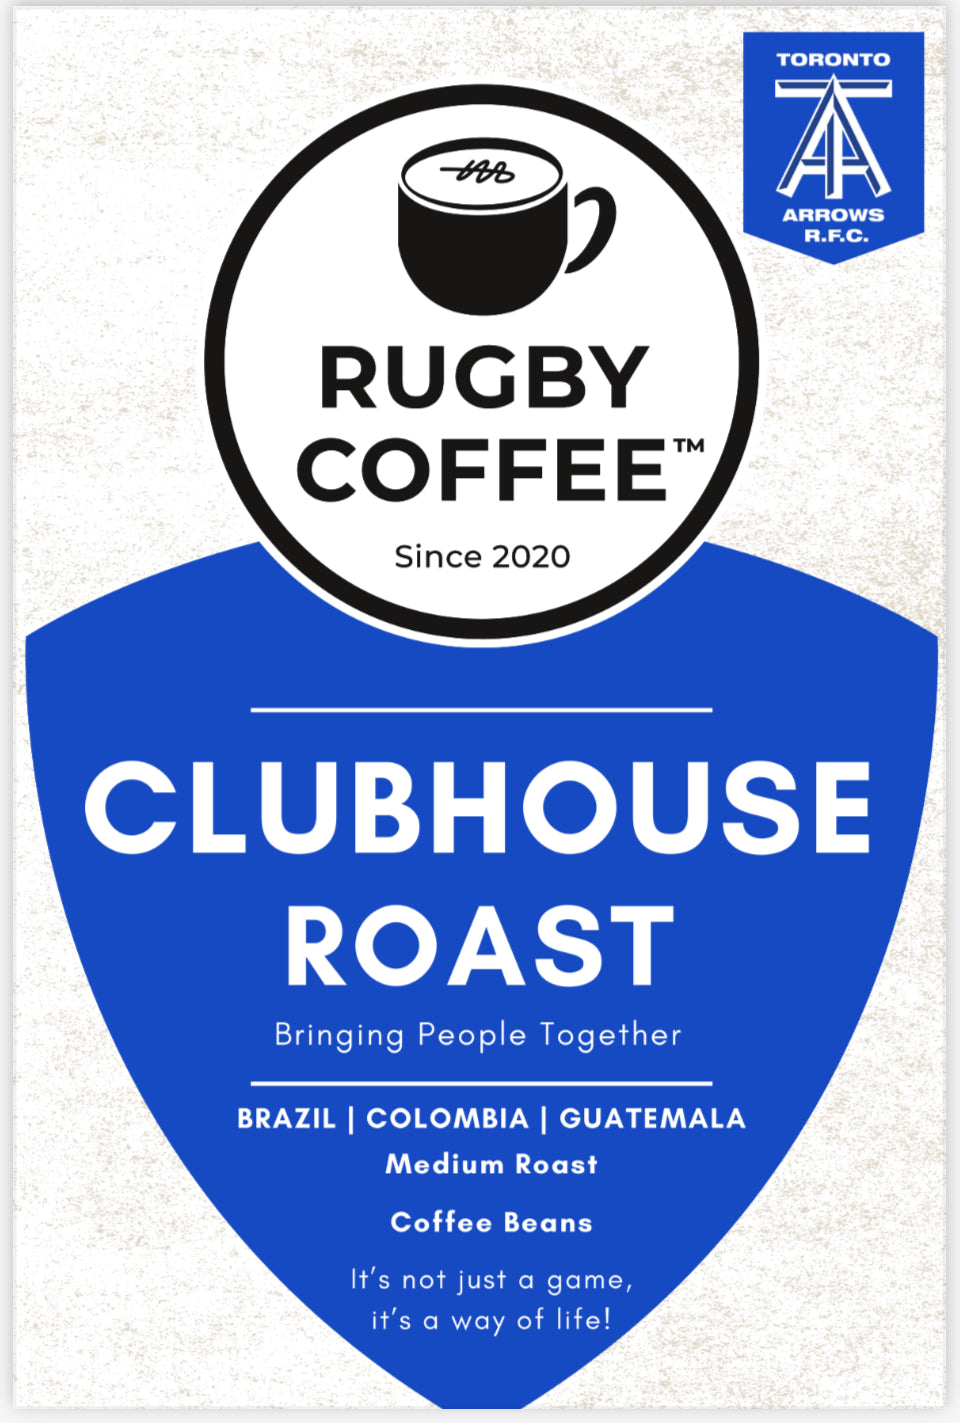 TORONTO ARROWS Clubhouse Roast 1lb Coffee